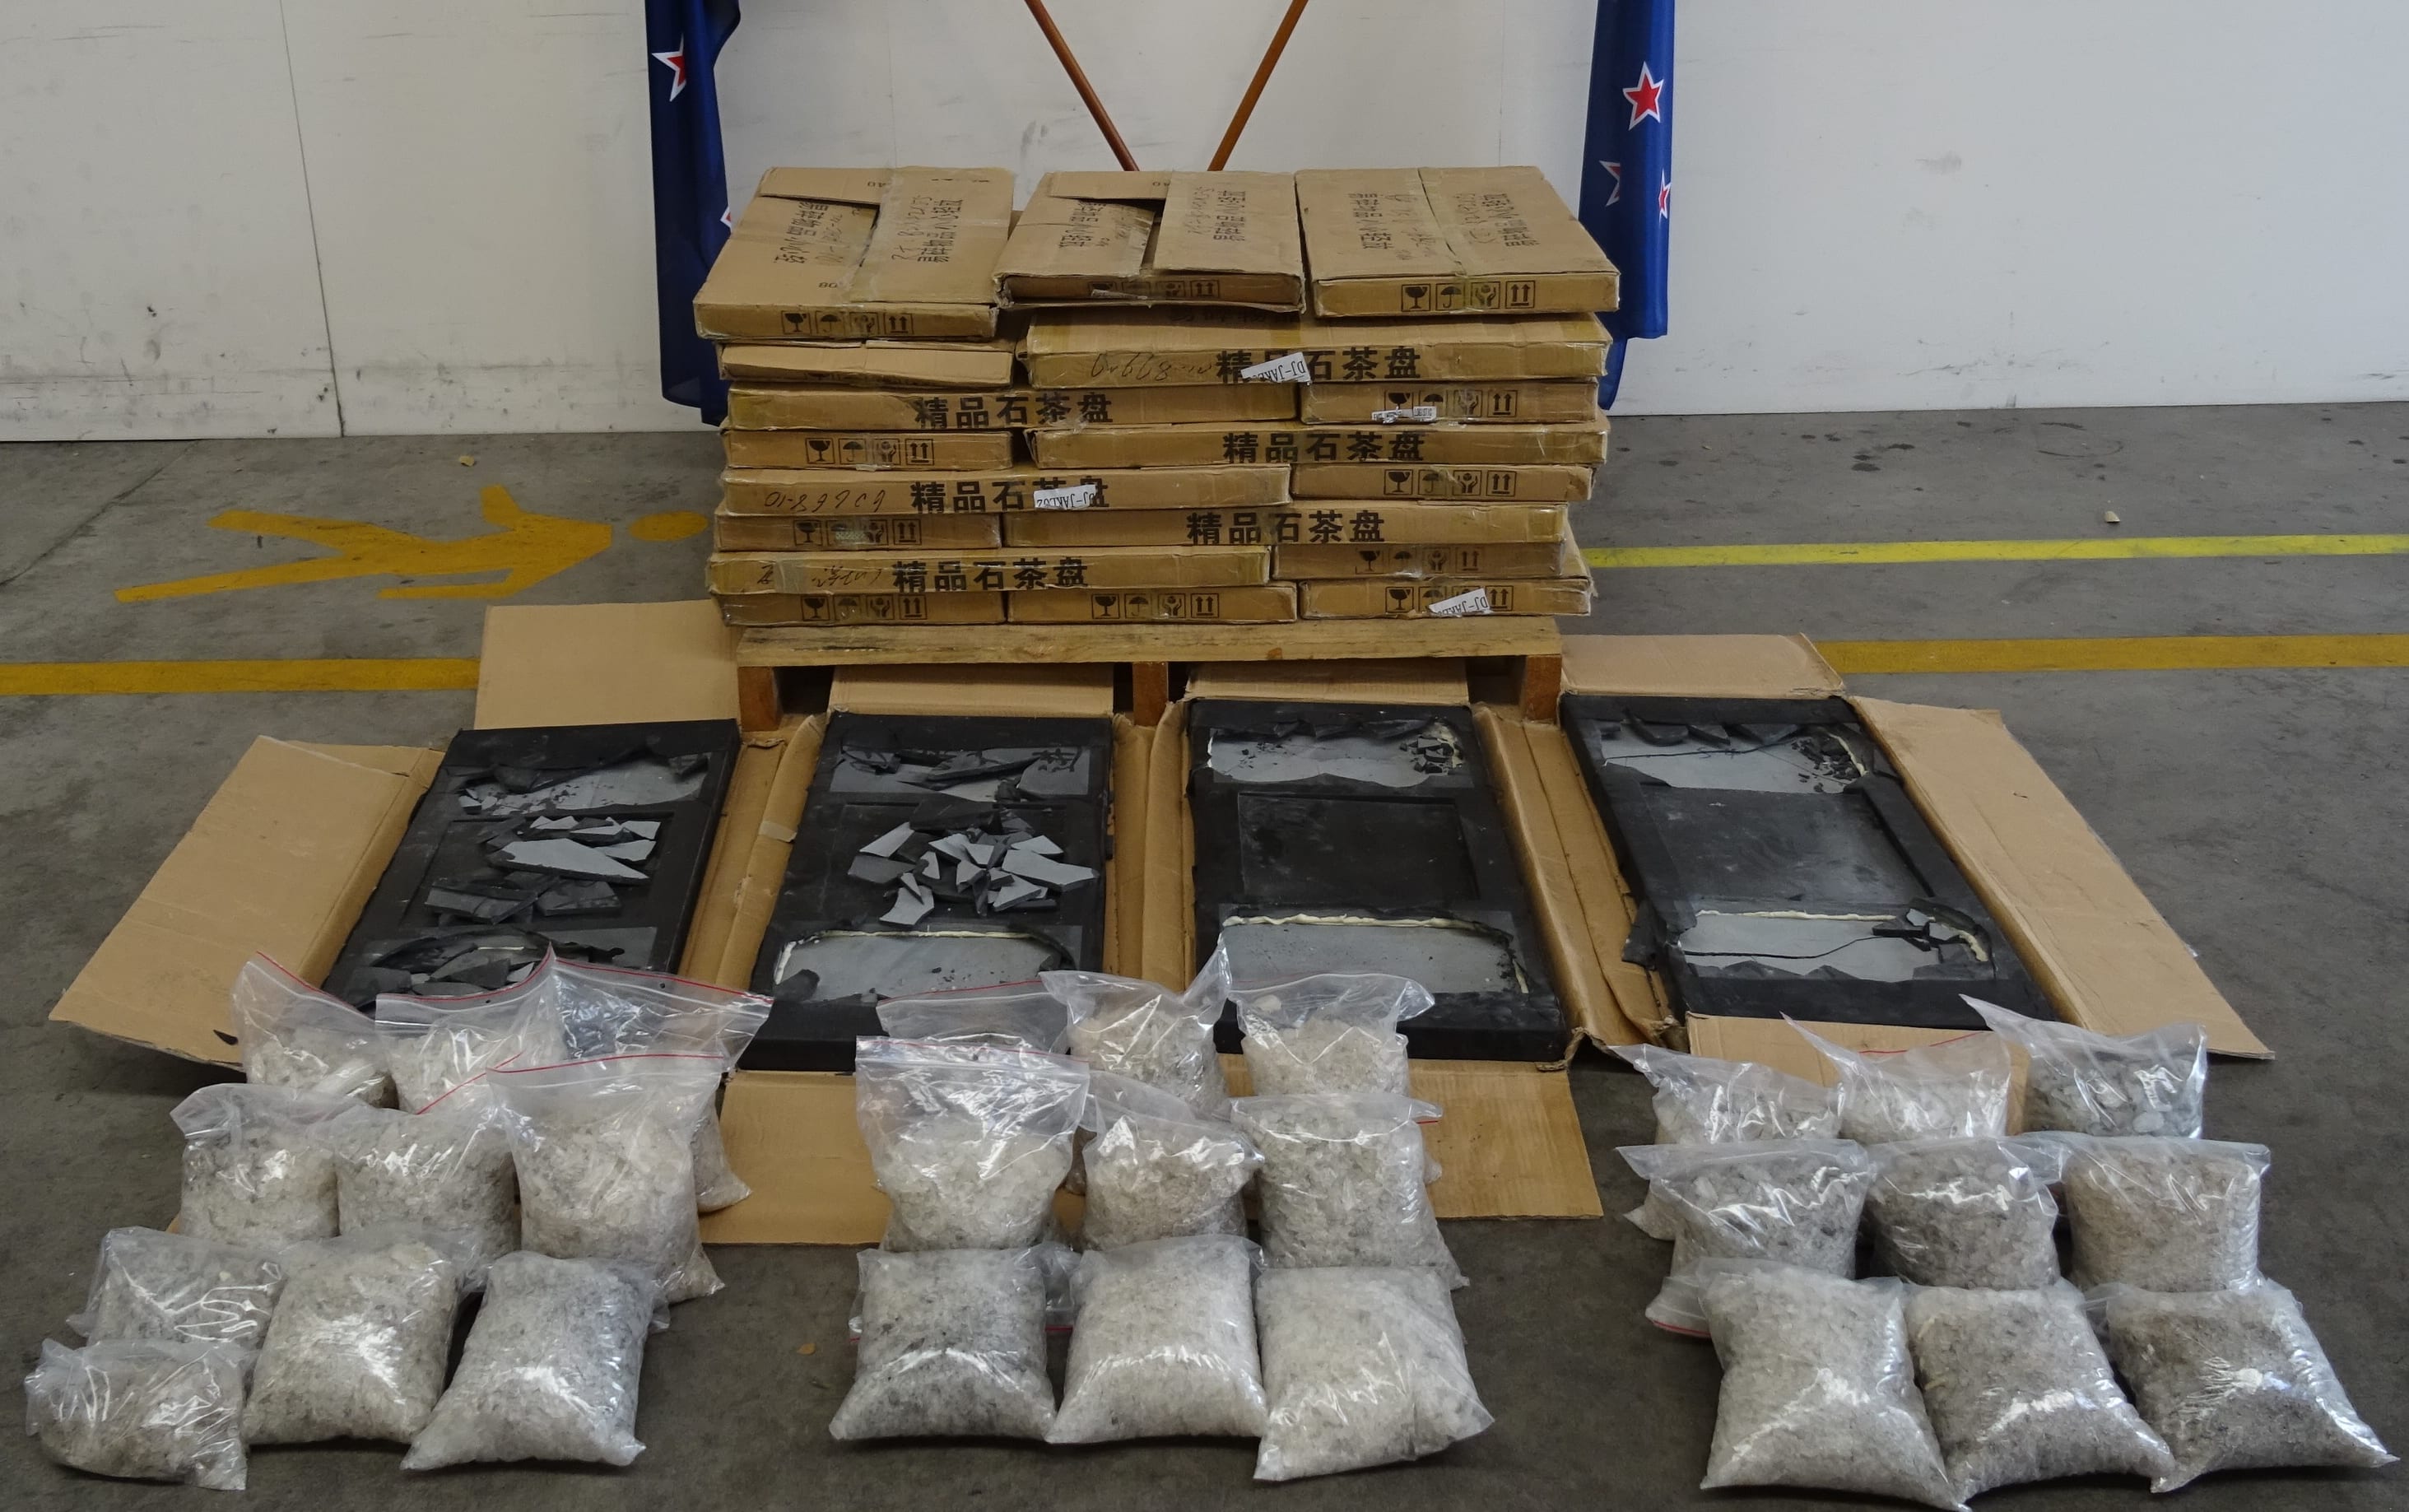 Methamphetamine seized by police.